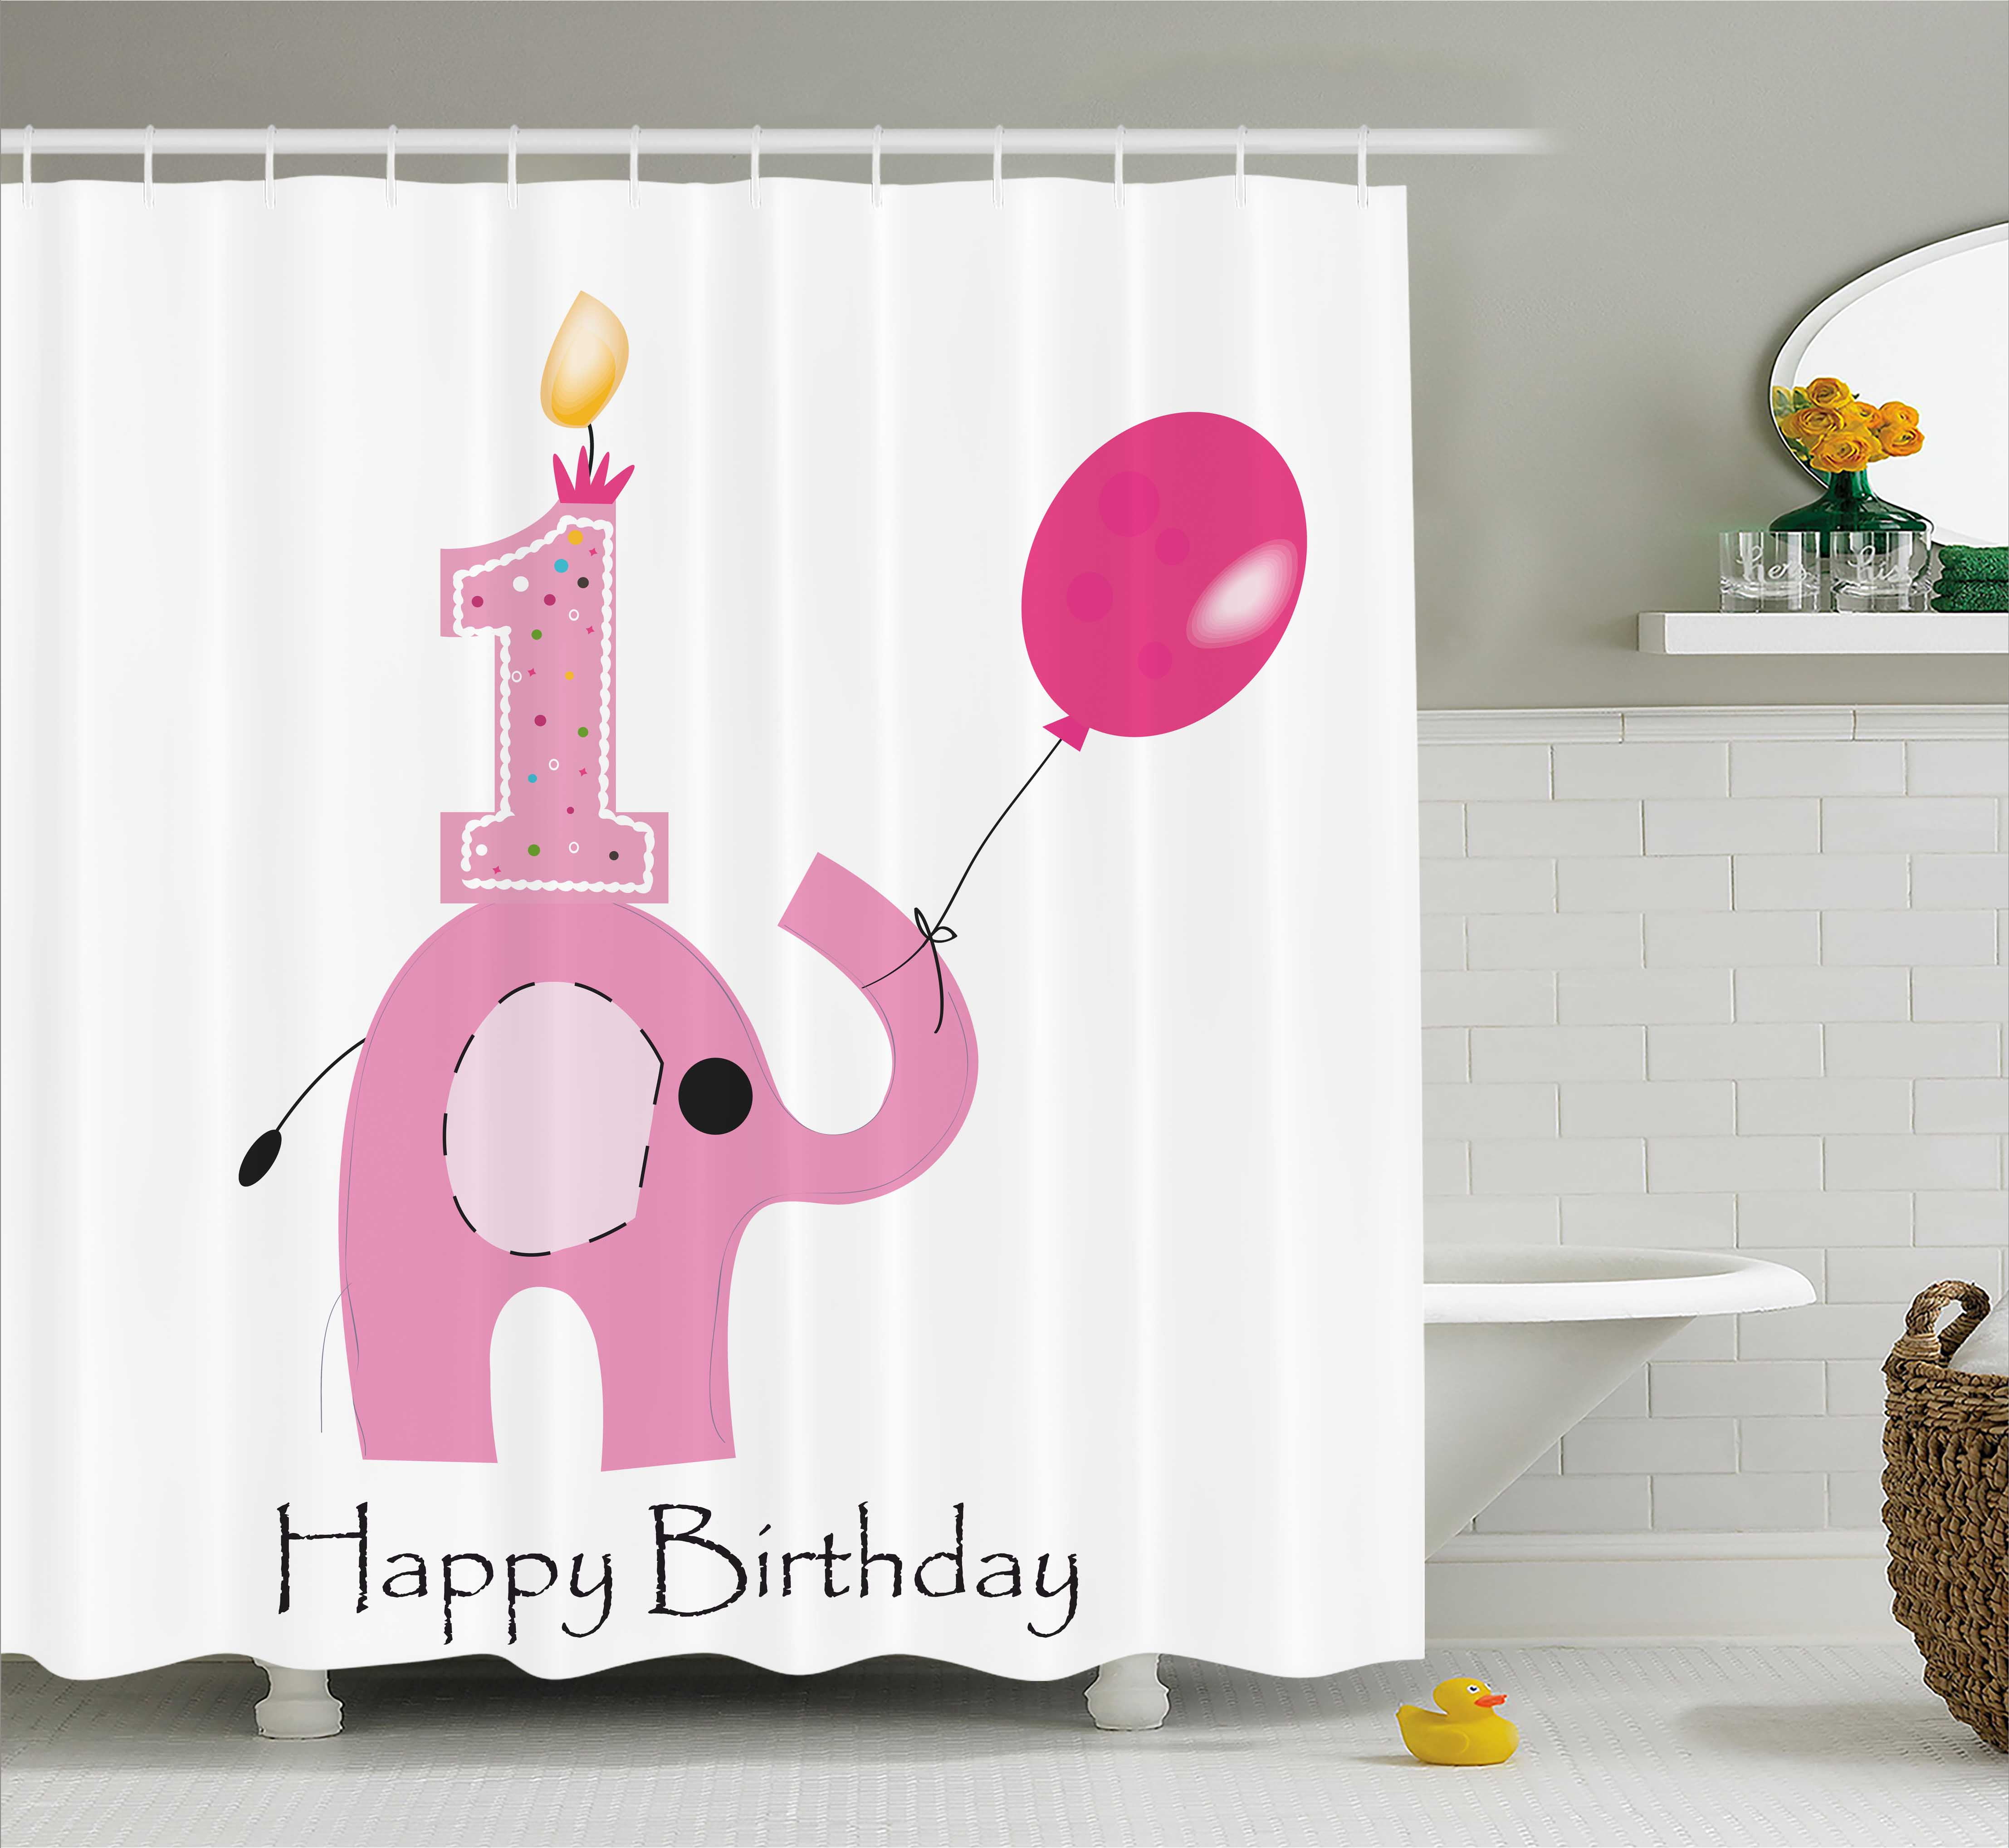 1st Birthday Decorations Shower Curtain Minimalist Design Elephant